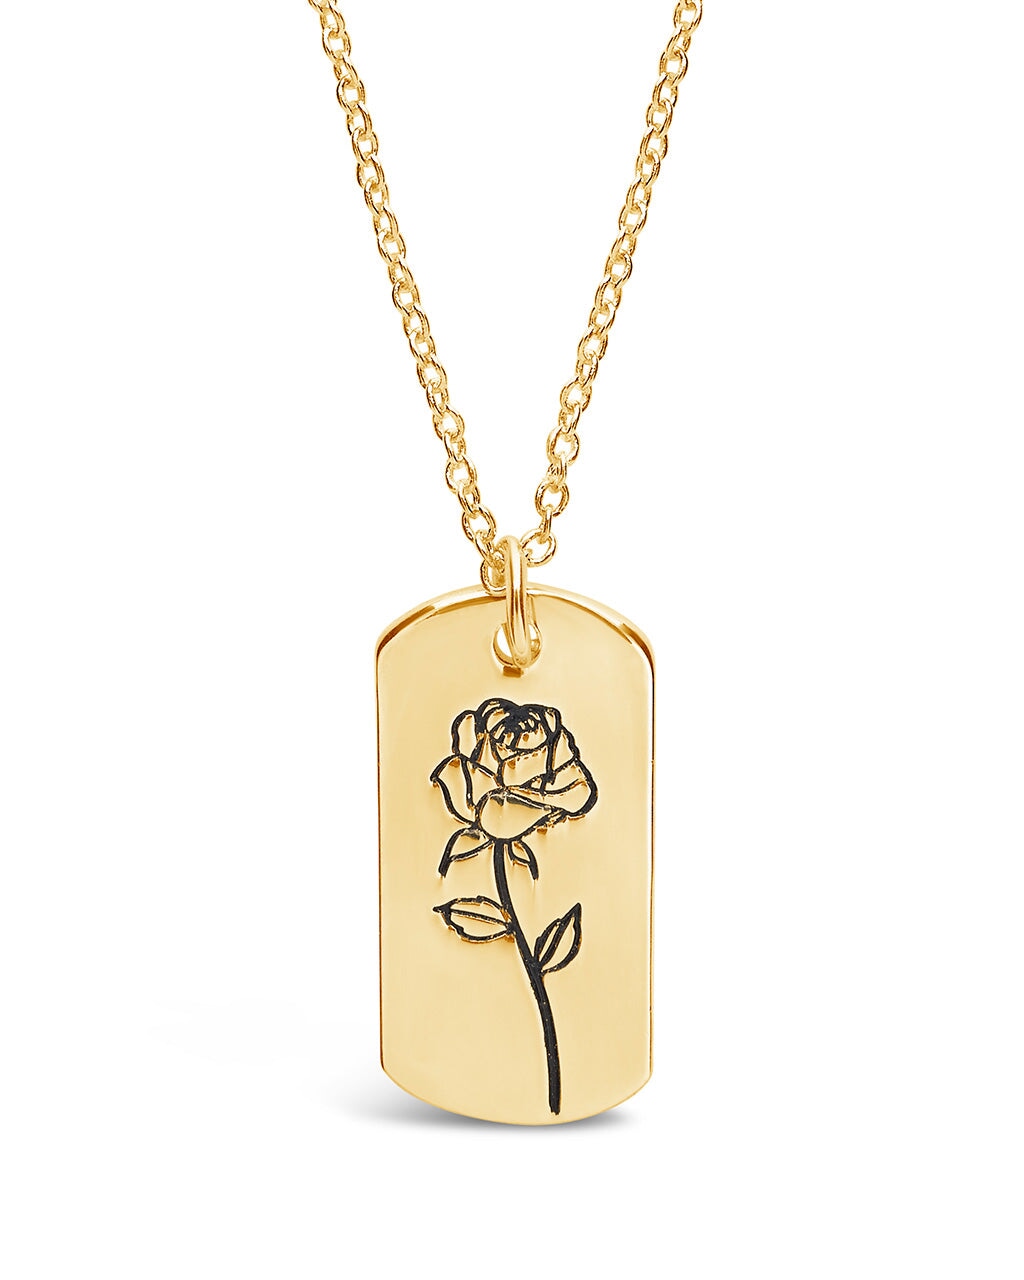 Birth Flower Pendant Necklace Sterling Forever Gold June / Rose 